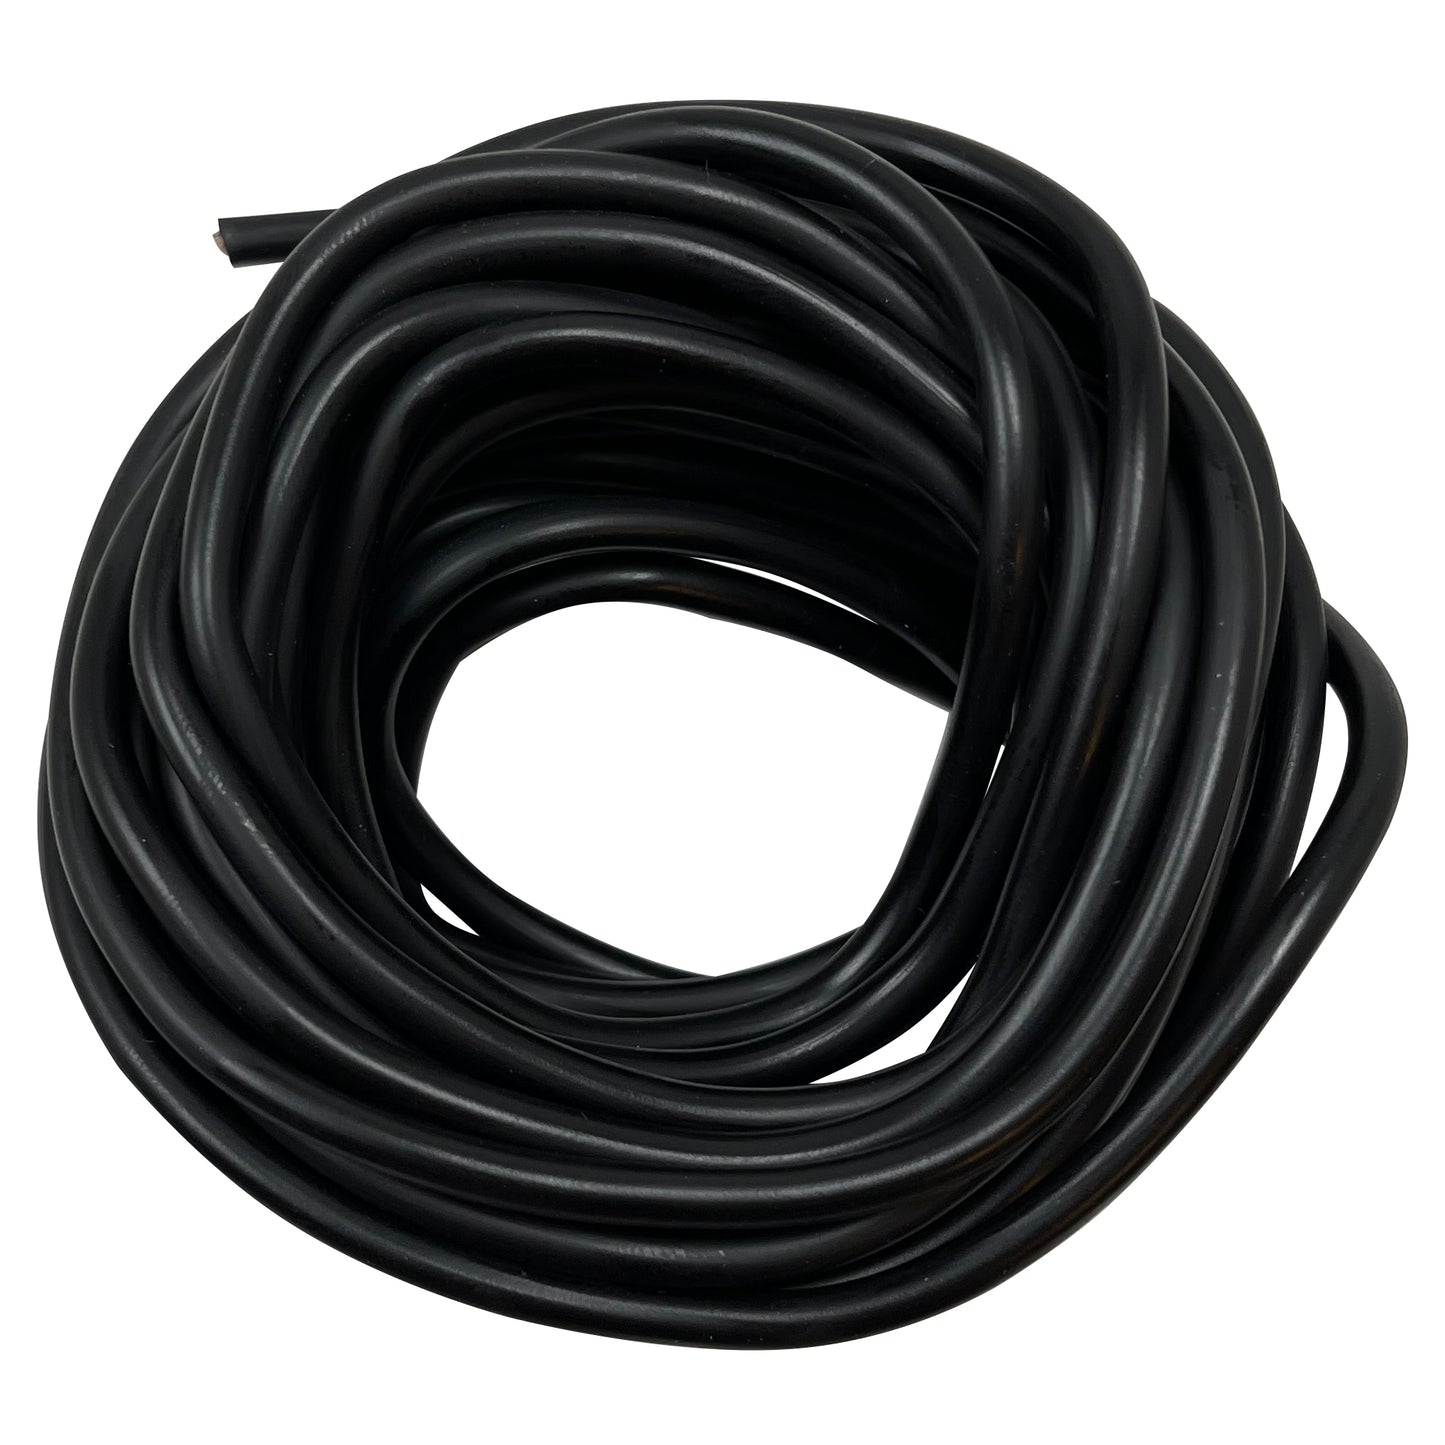 12 Gauge Universal Automotive Fusible Link Wire - 100' FT Spool